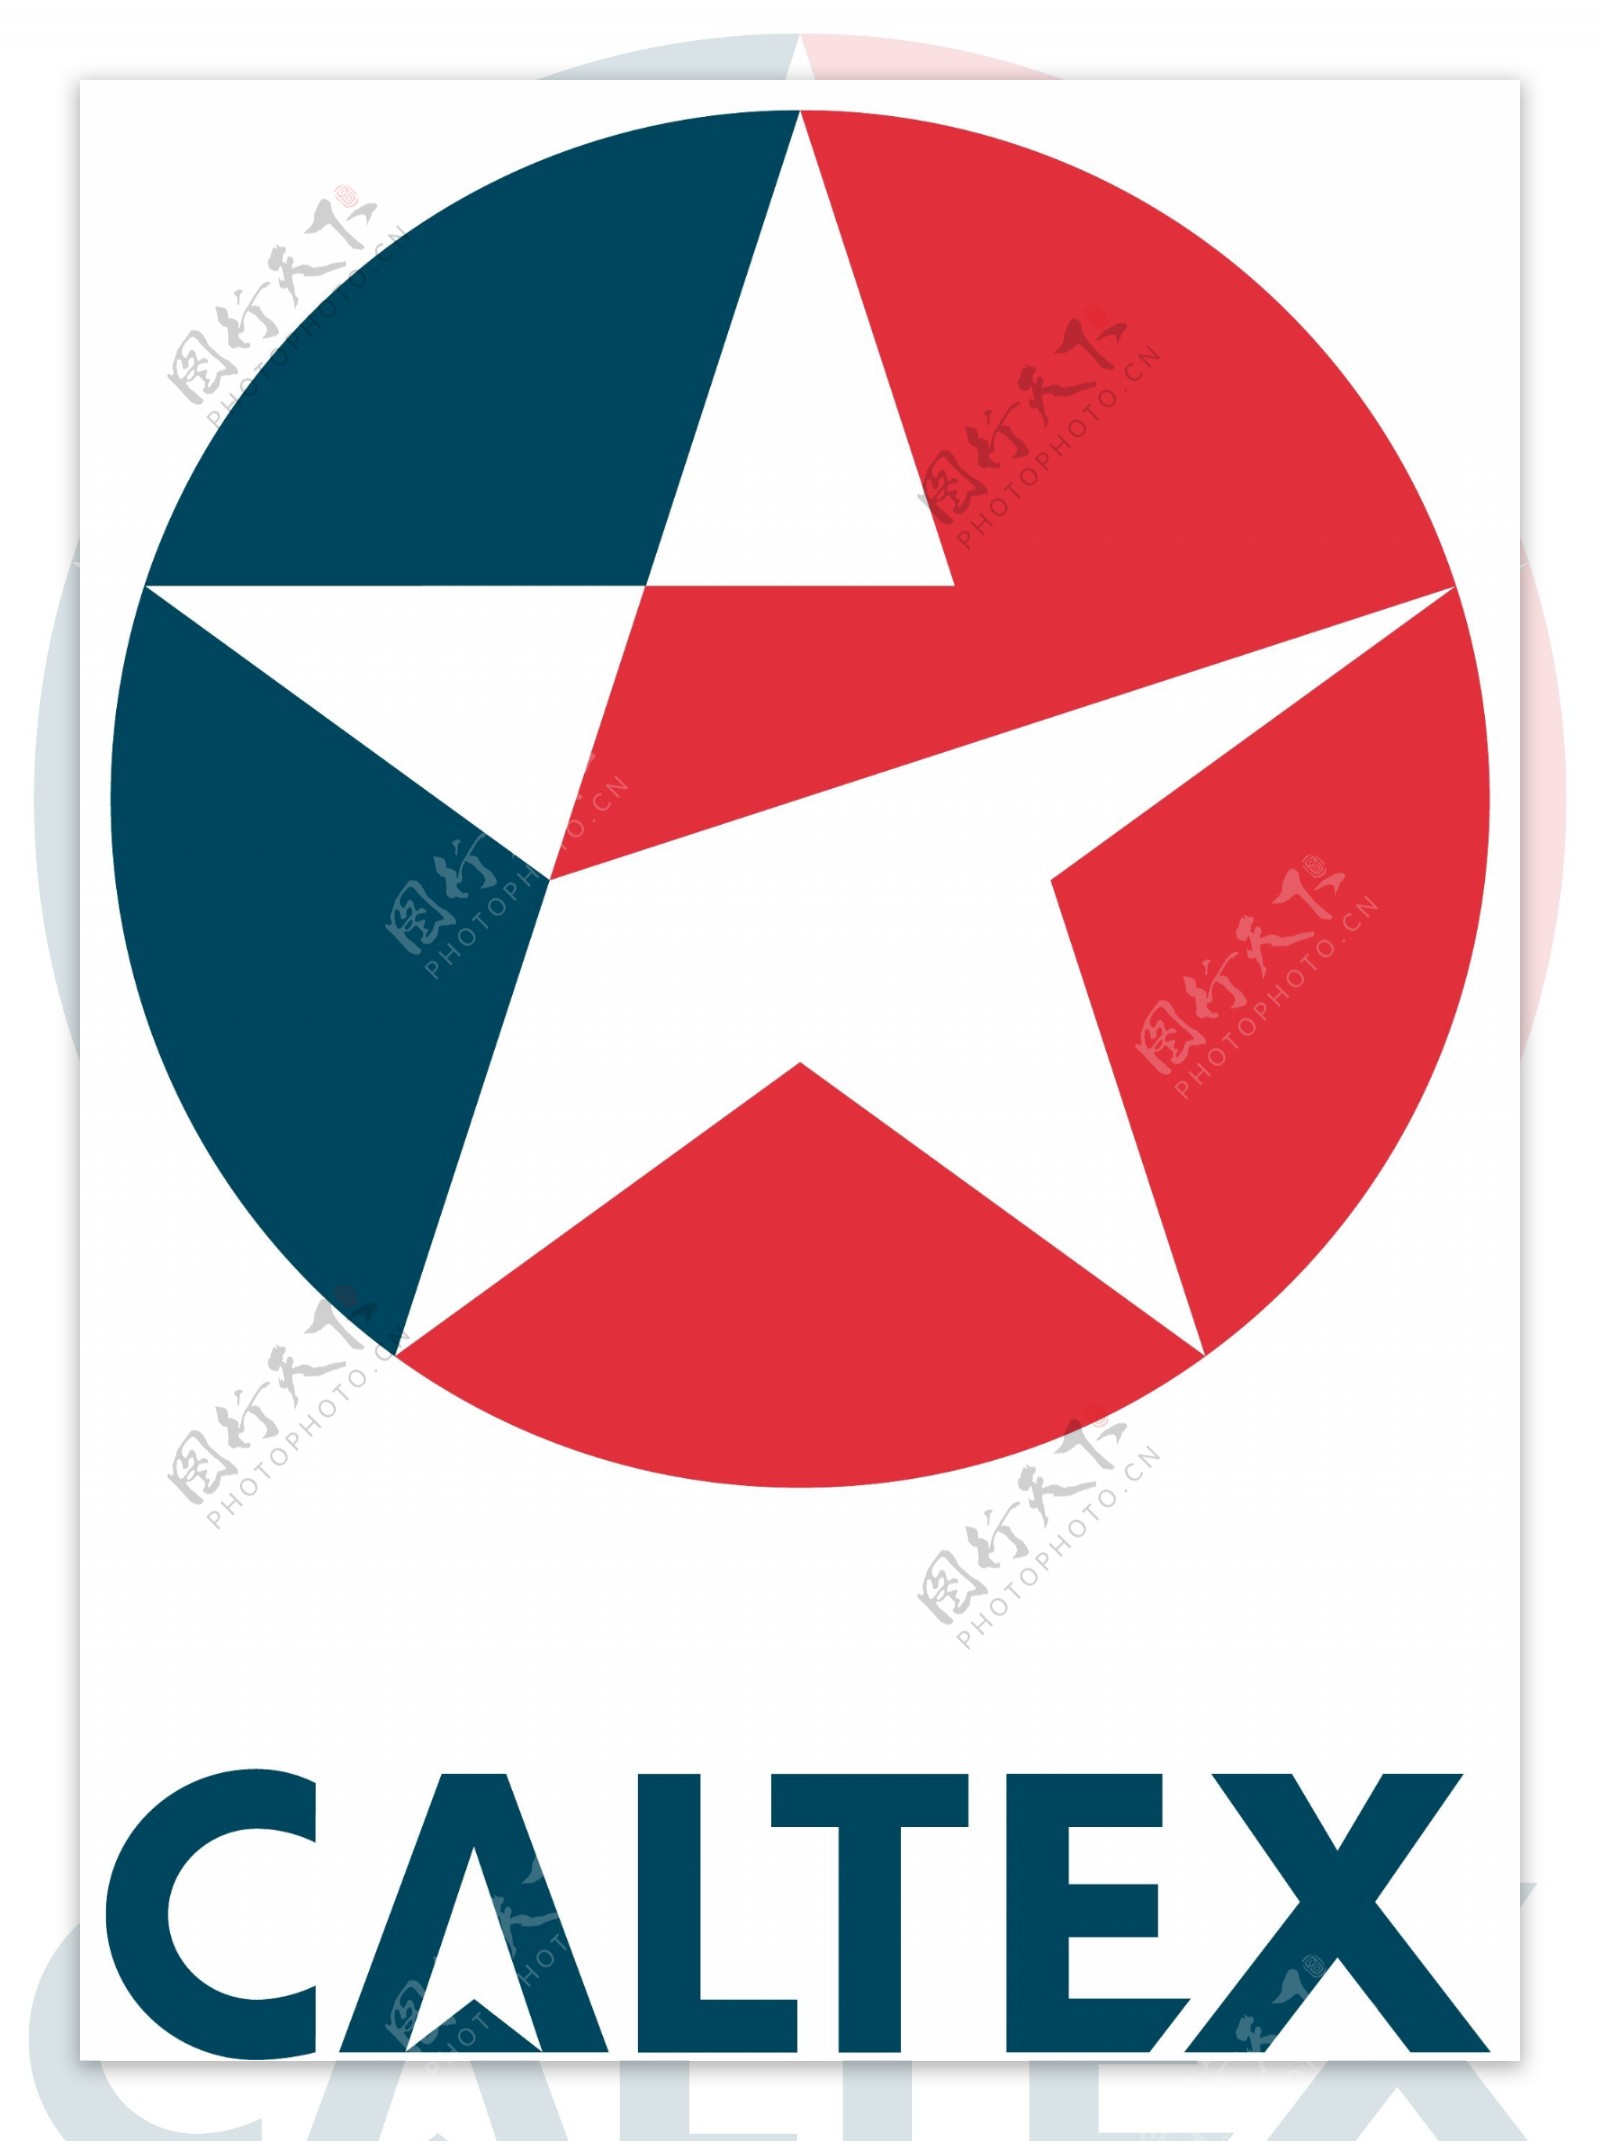 caltex加德士logo图片